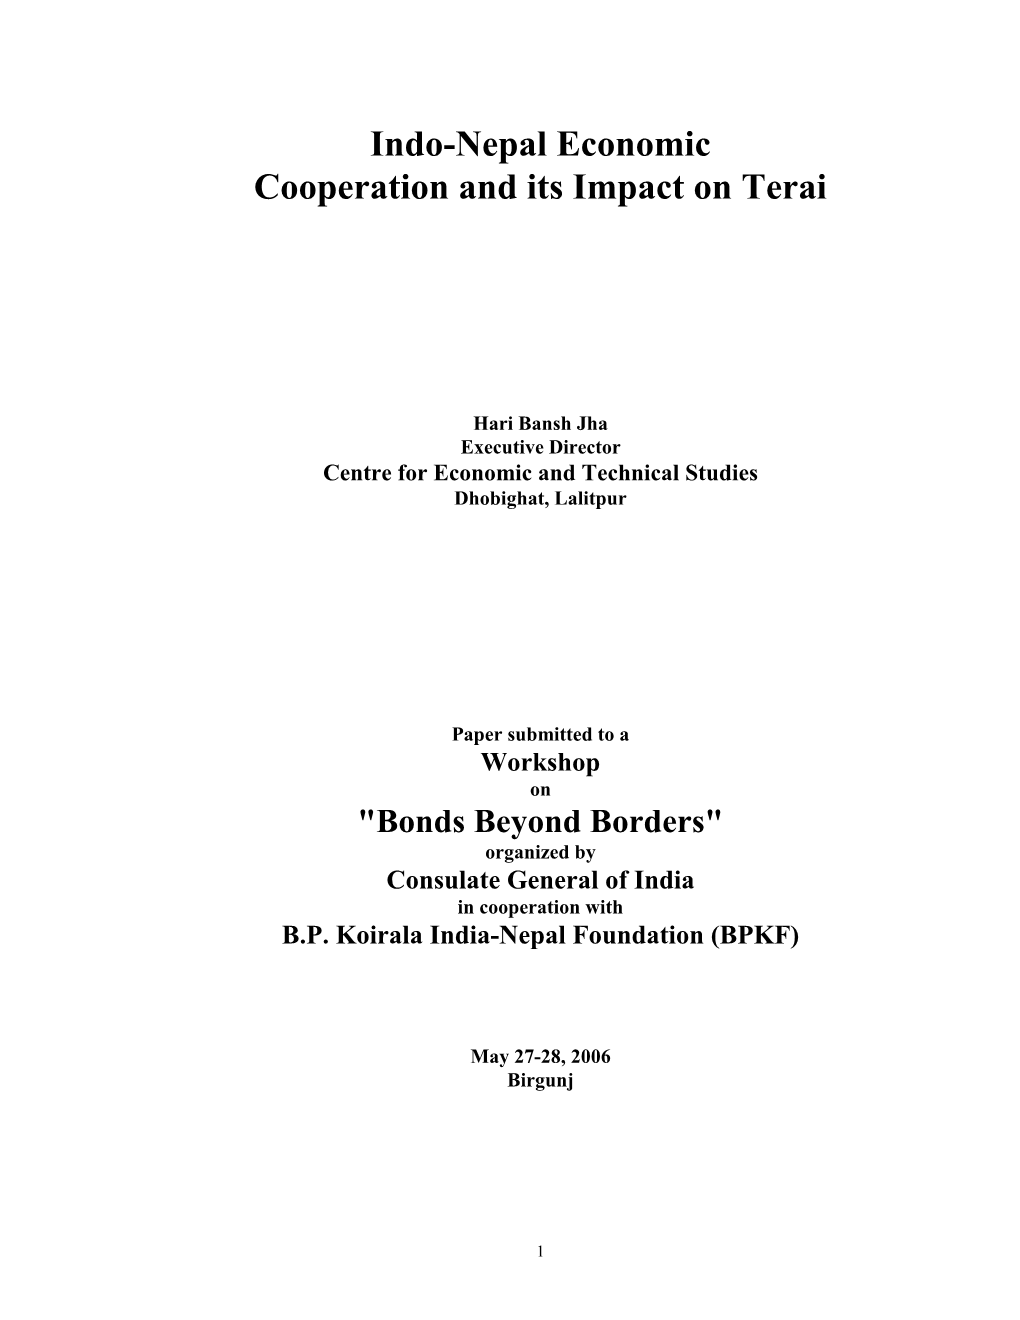 Contributions of Terai In